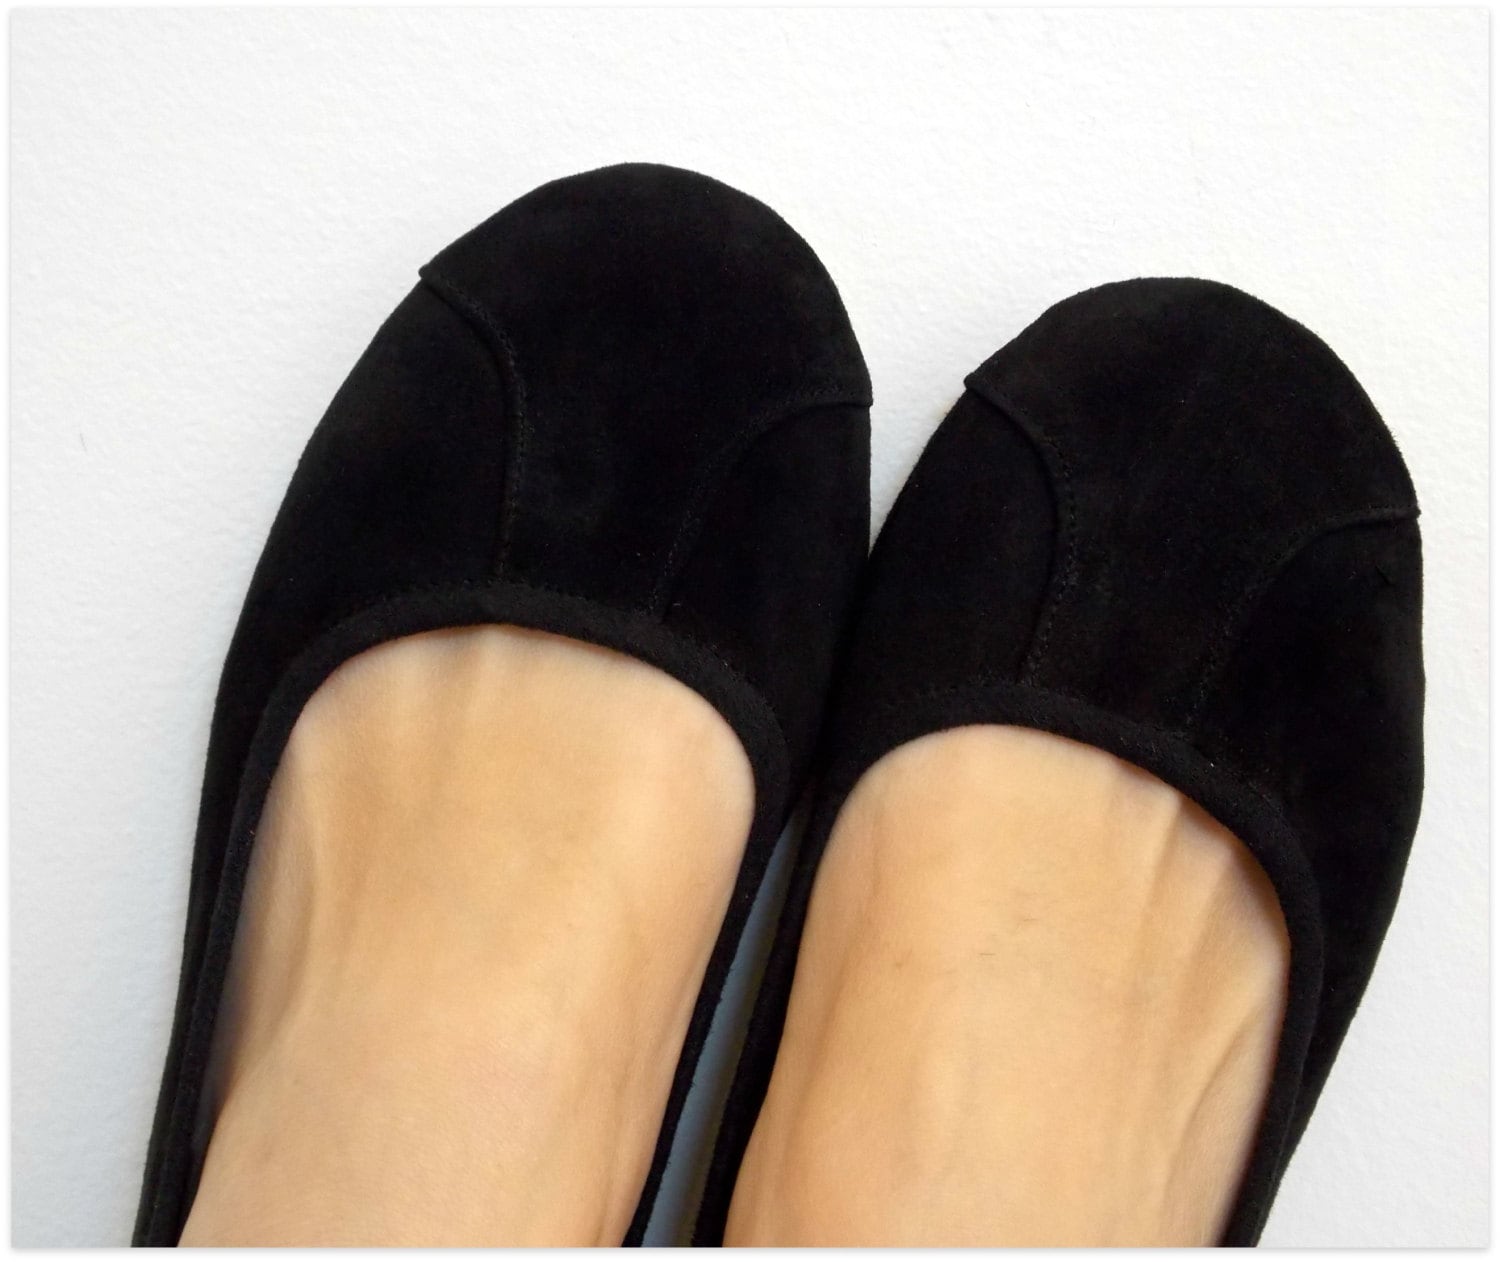 ISLANDER. Black Flats / Women Shoes / Leather Flat Shoes / - Etsy